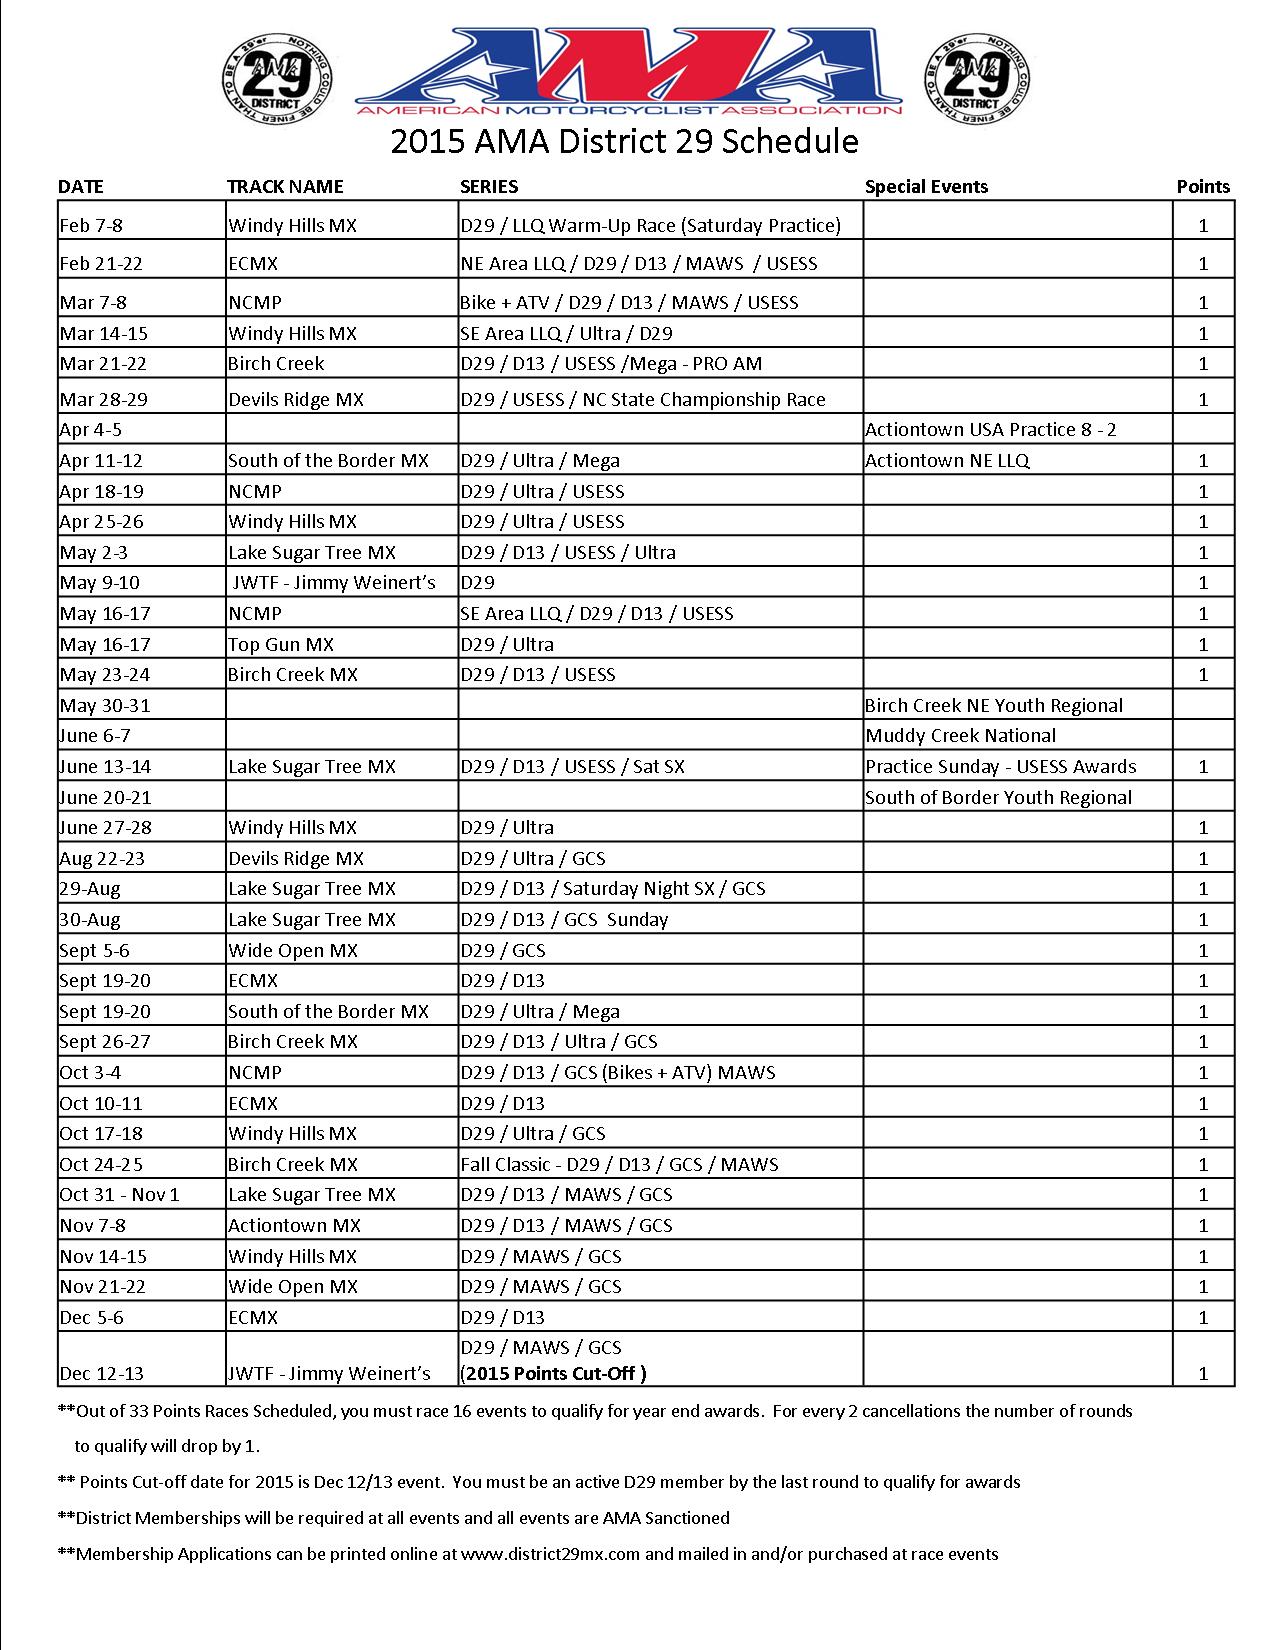 2015 AMA District 29 Schedule North Carolina Motorsports Park